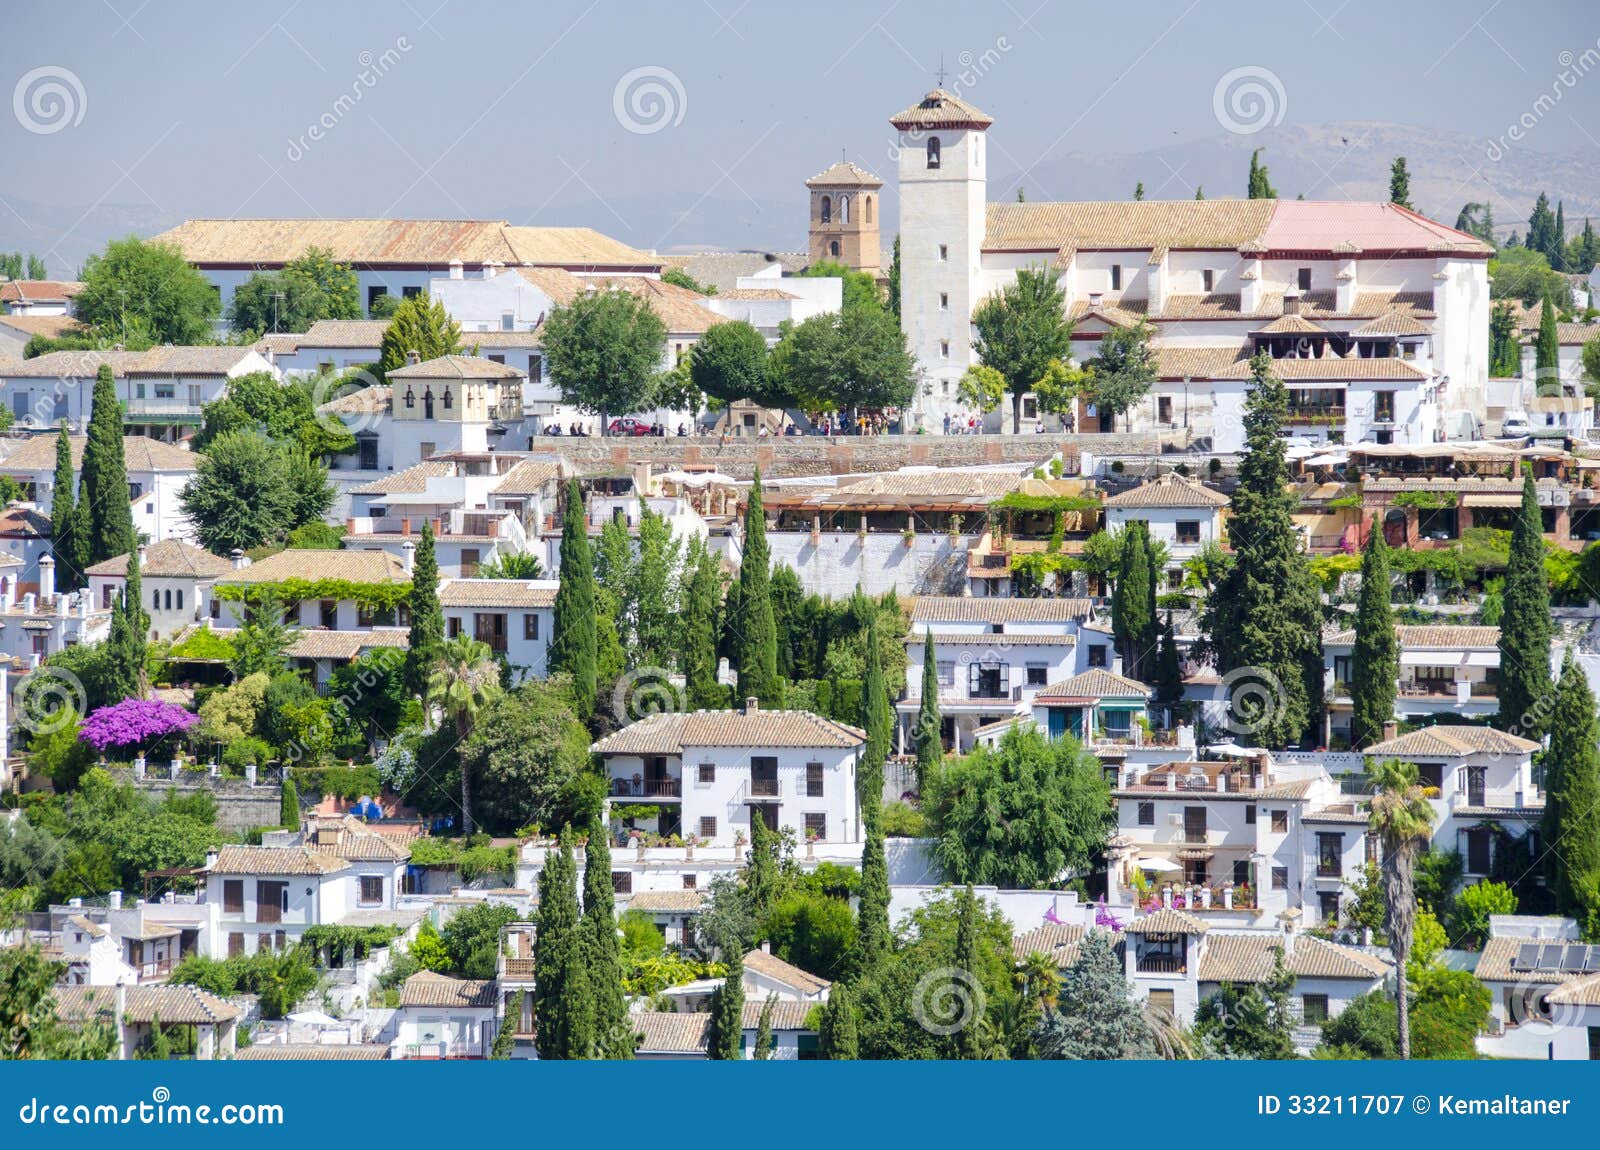 City Of Granada, Spain Royalty Free Stock Photography - Image: 33211707